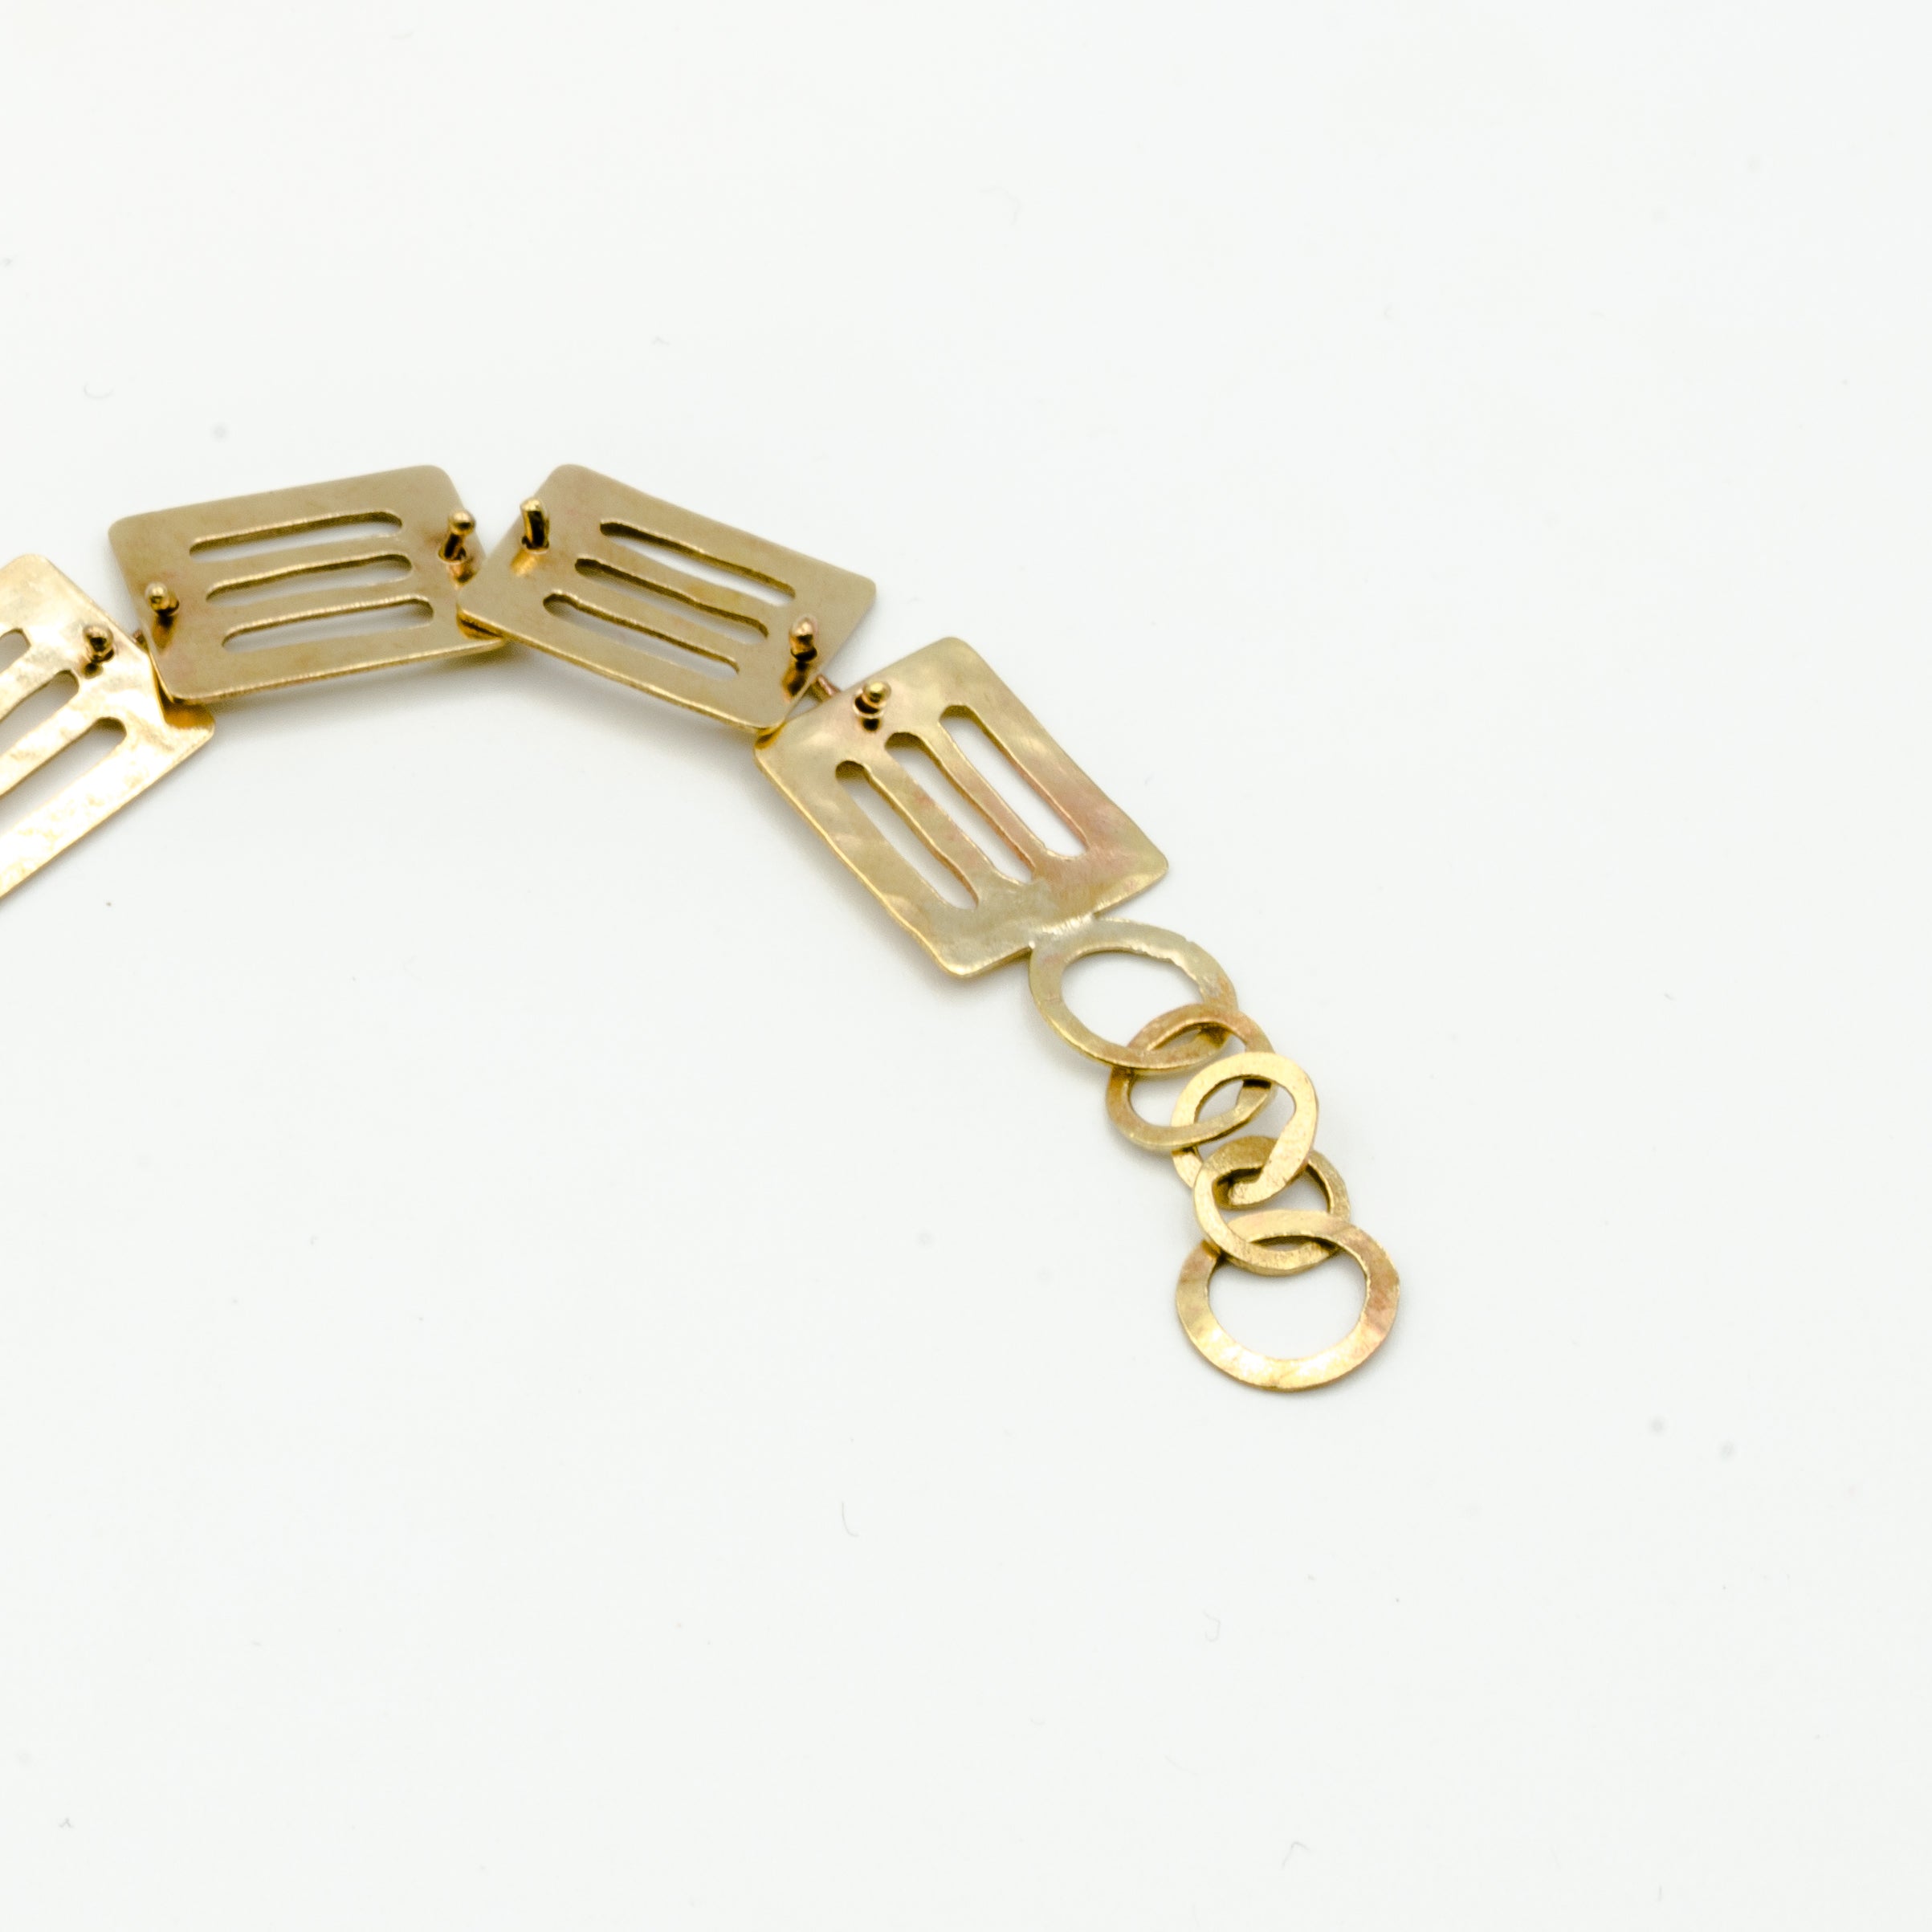 cutout brass pieces bracelet clasp detail on white background